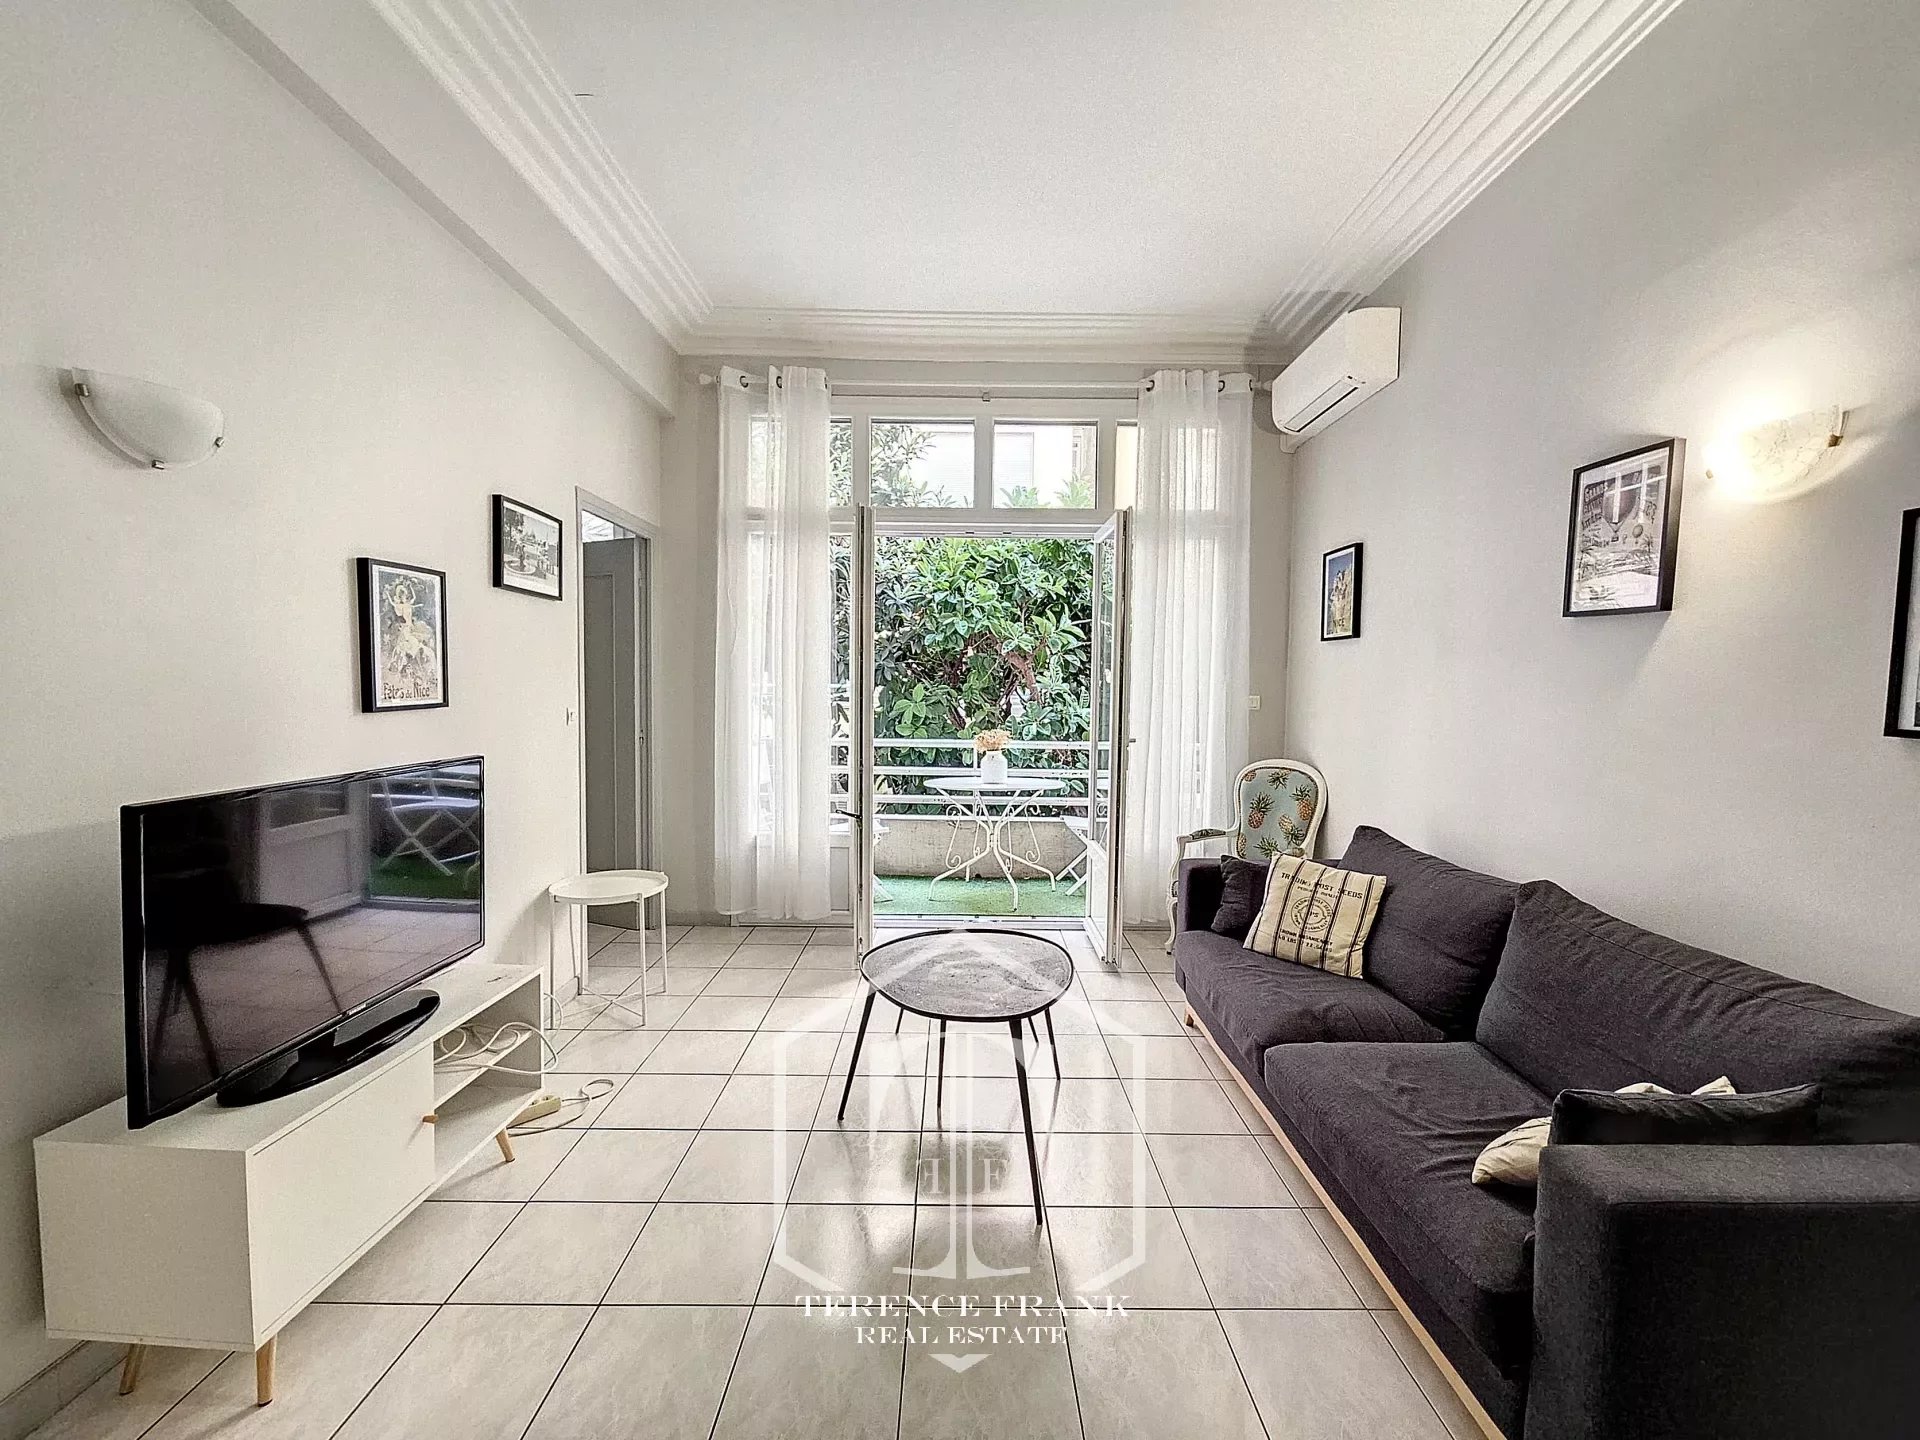 Vente Appartement 39m² 2 Pièces à Nice (06000) - Terence Frank Real Estate